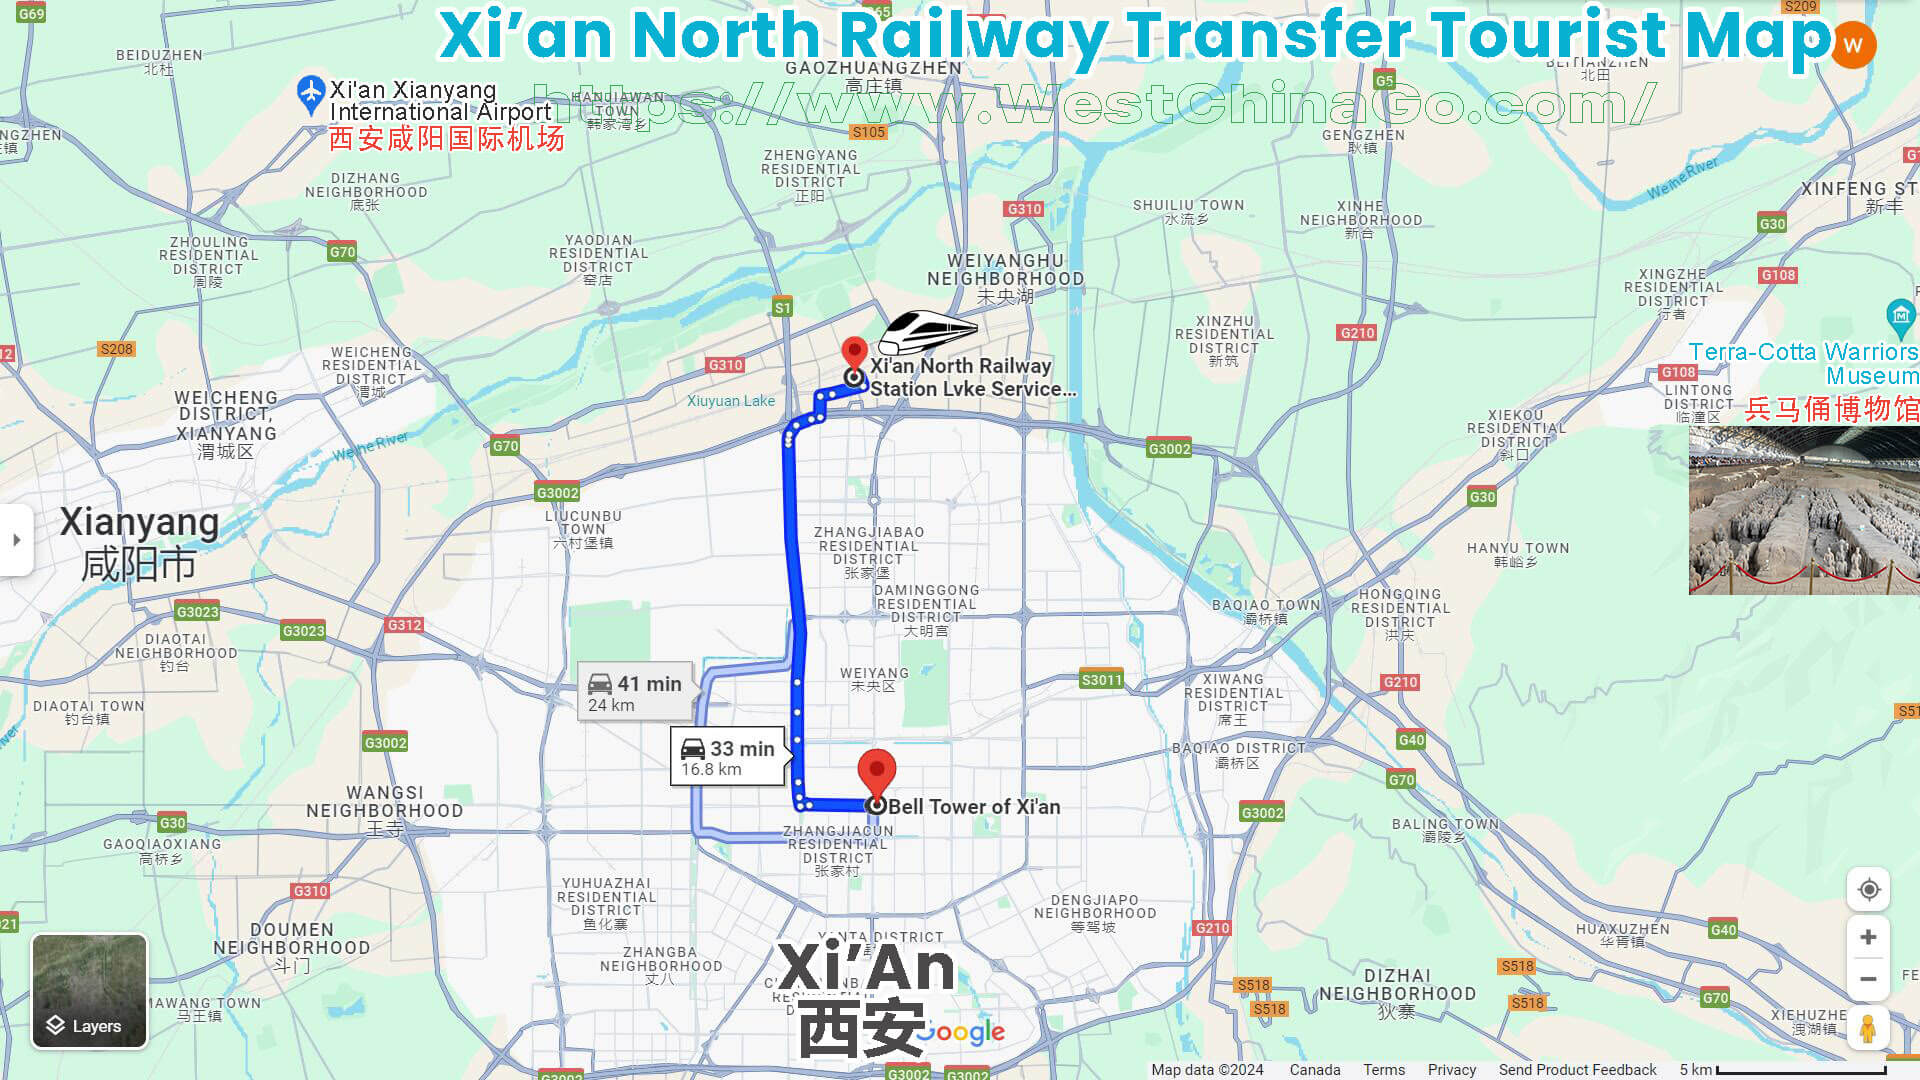 Xi’an North Railway Transfer Tourist Map